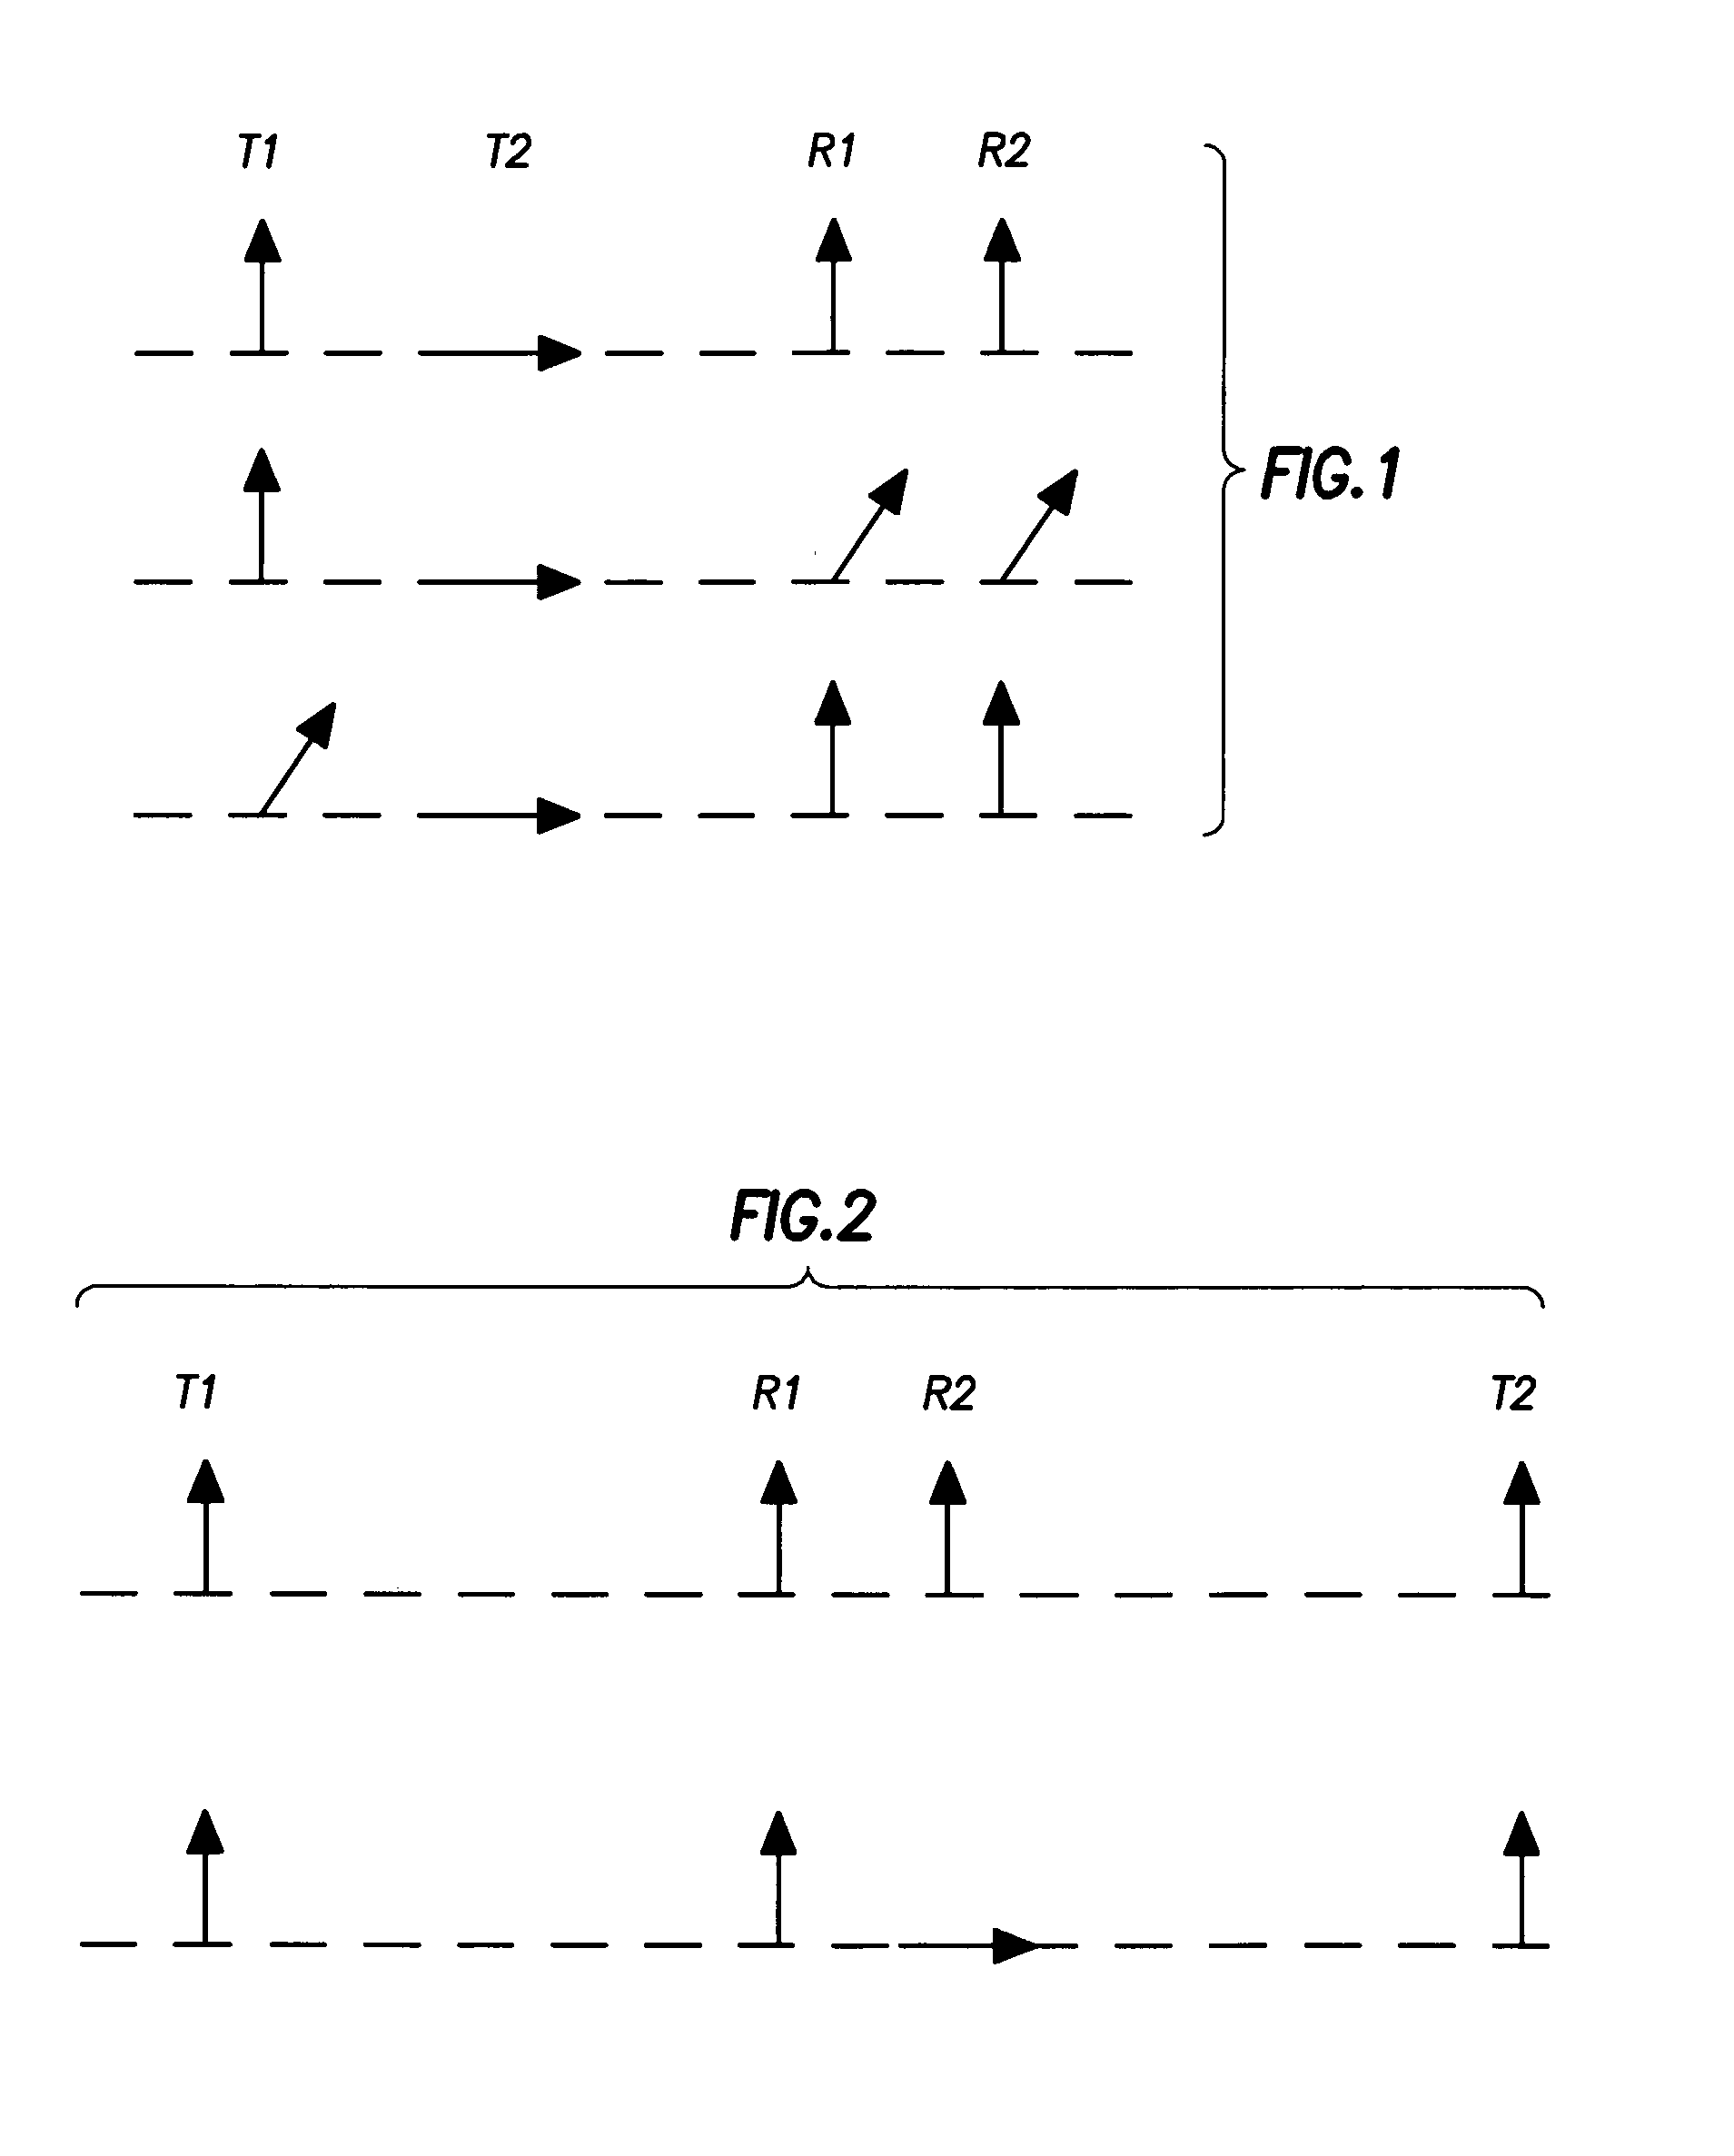 Propagation based electromagnetic measurement of anisotropy using transverse or tilted magnetic dipoles